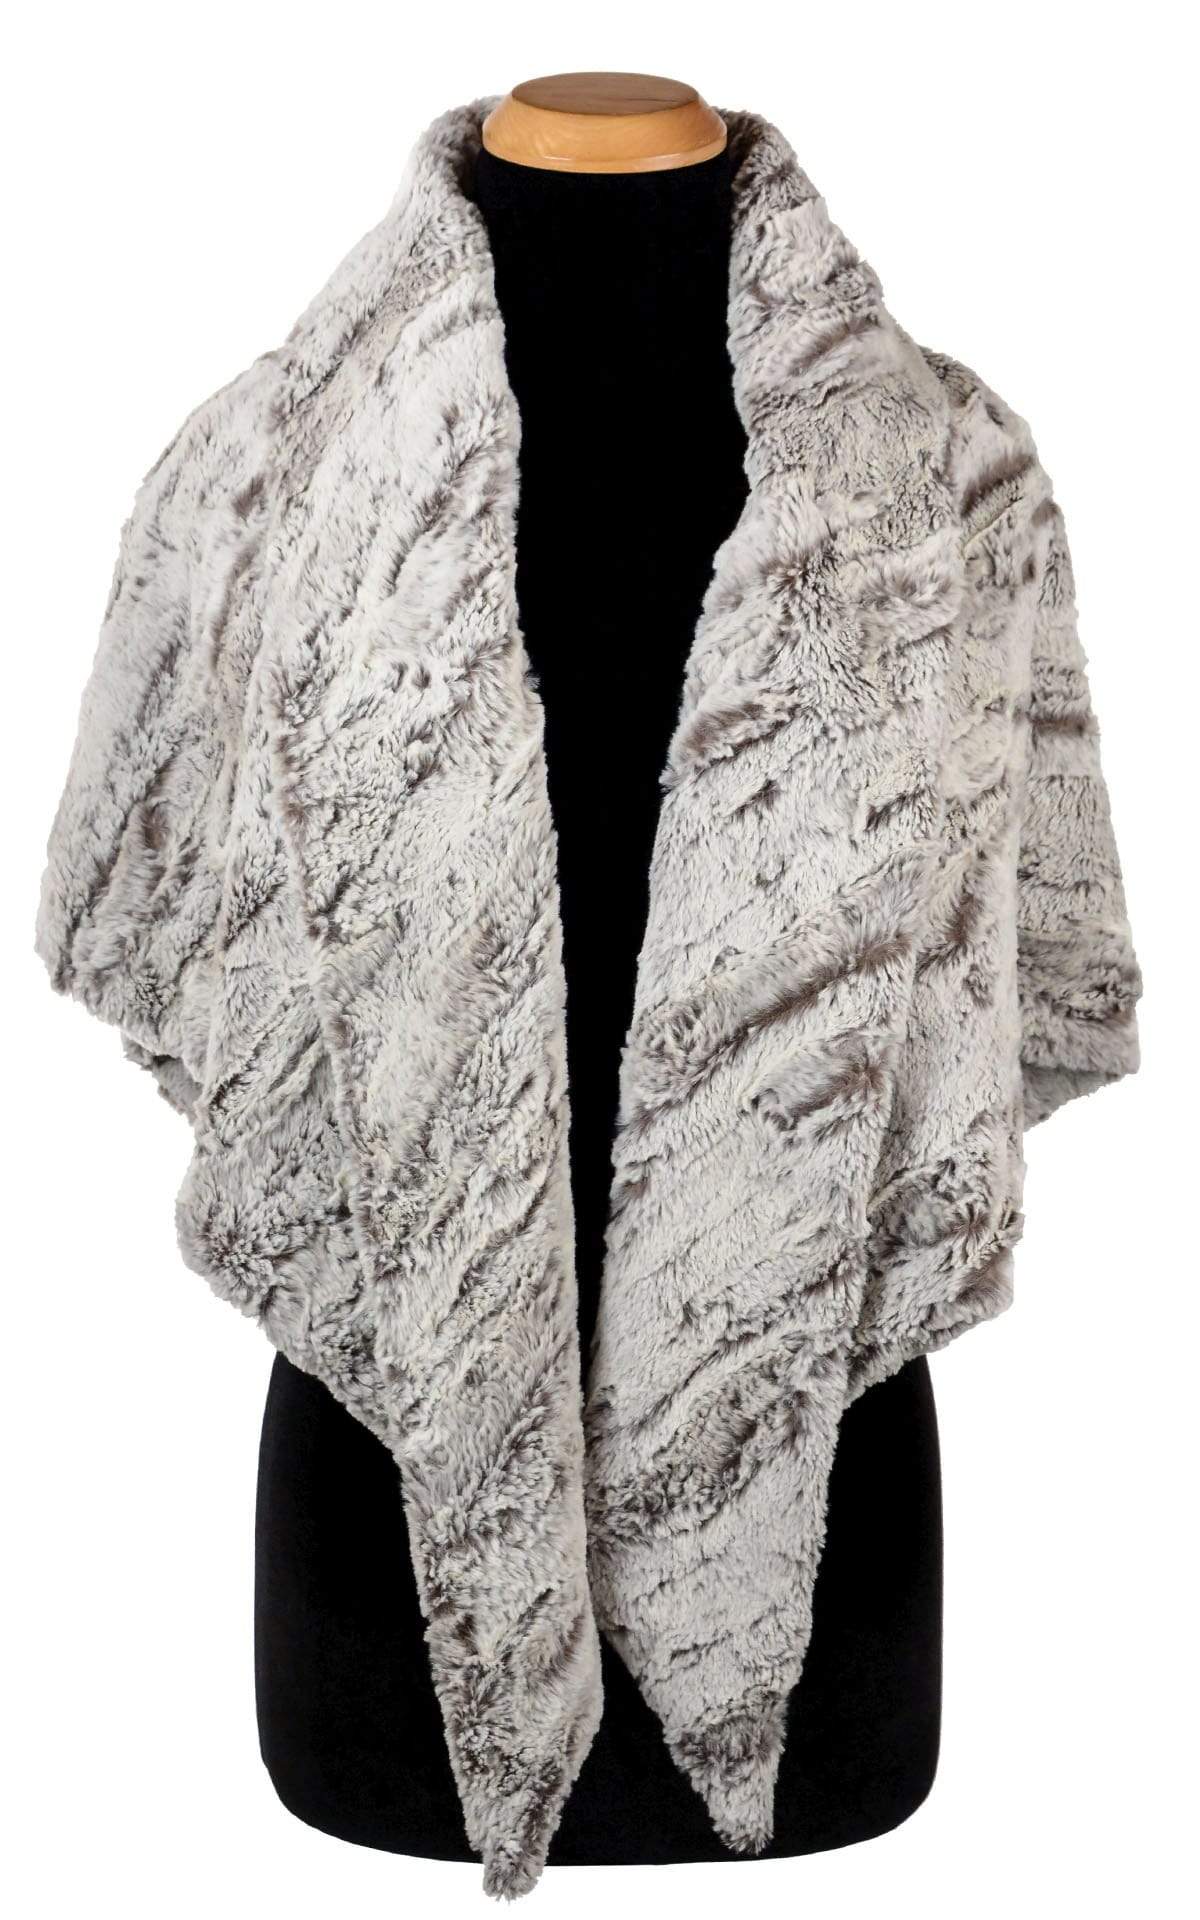 Model wearing Bermuda triangle scarf | Khaki faux fur, cream, gray | Handmade by Pandemonium Millinery Seattle, WA USA